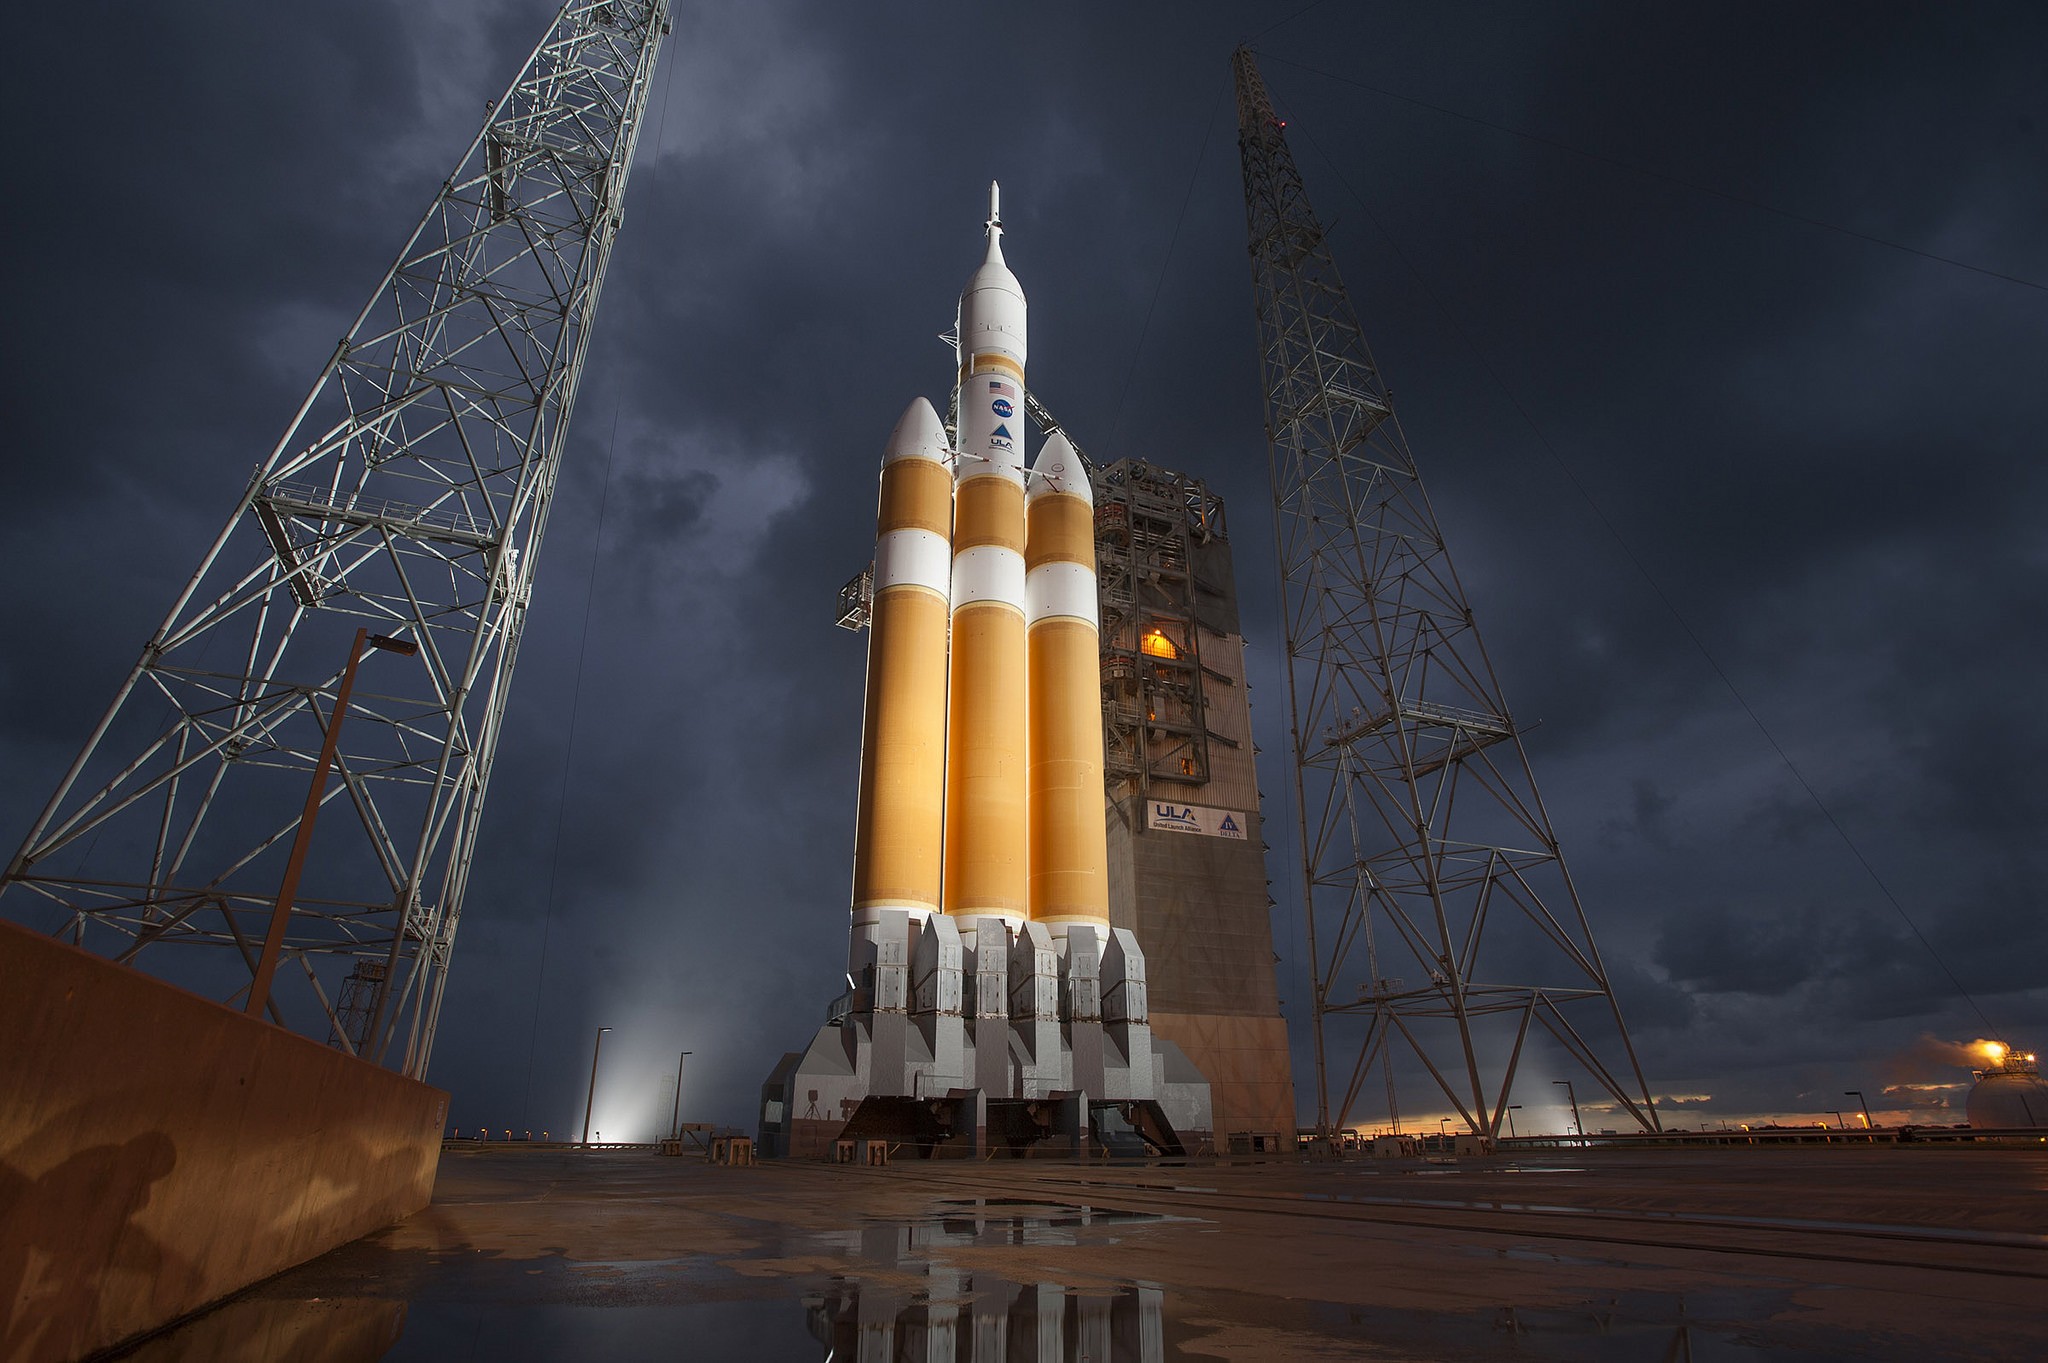 Landscape Clouds Storm NASA Spaceship Rocket Orion USA Construction Site Scaffolding Lights Water Pr 2048x1363